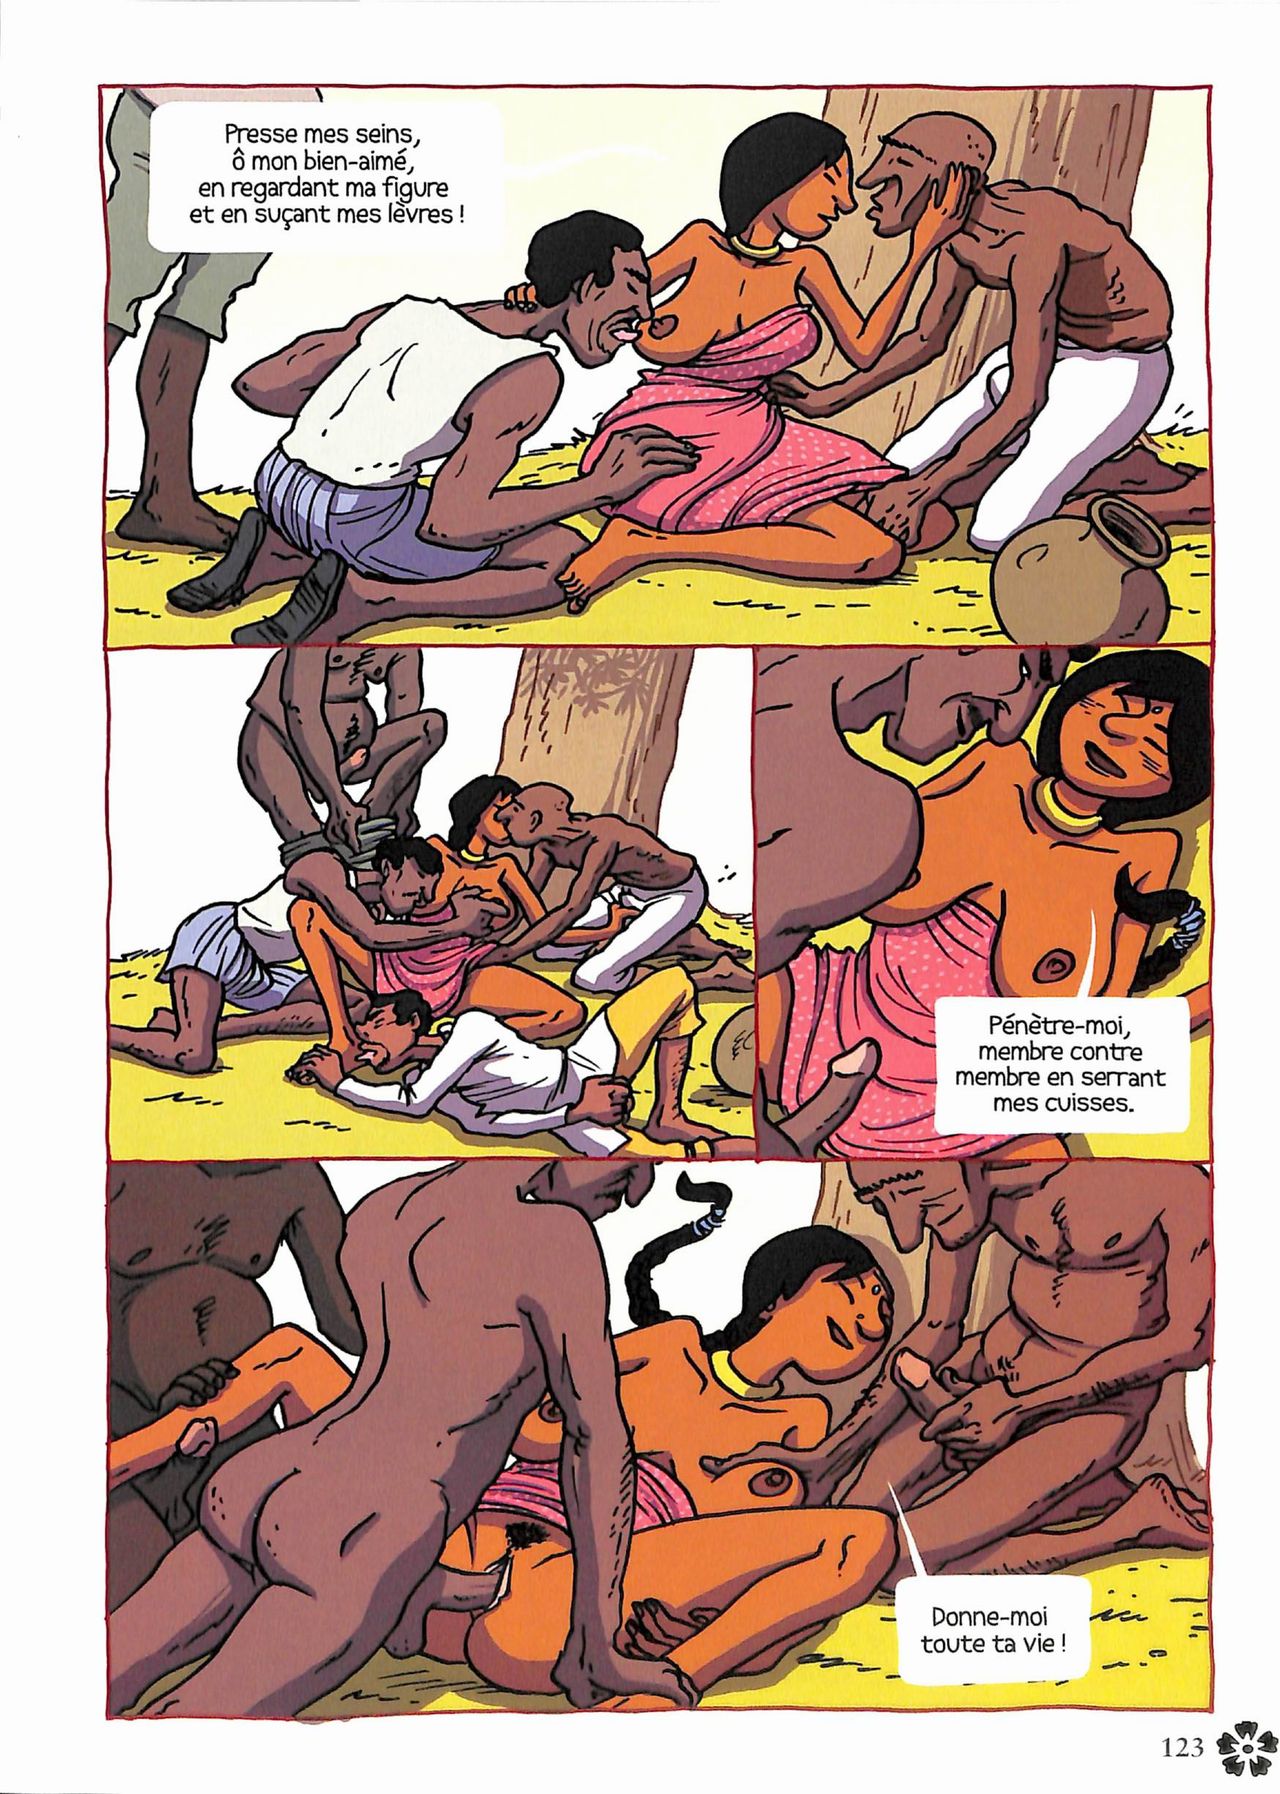 Kama Sutra en bandes dessinées - Kama Sutra with Comics numero d'image 123